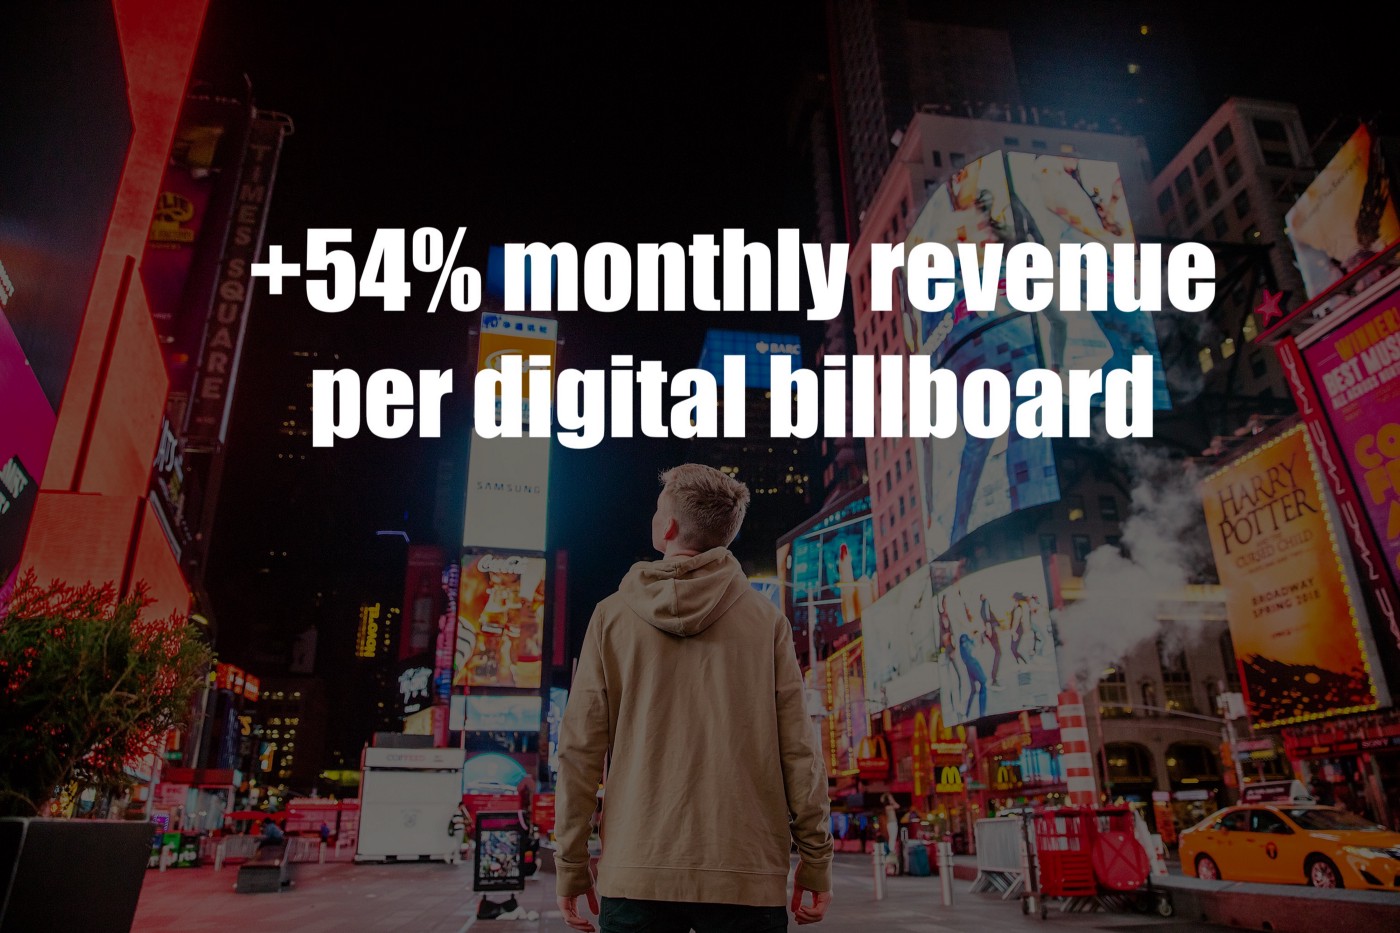 Digital billboard revenue